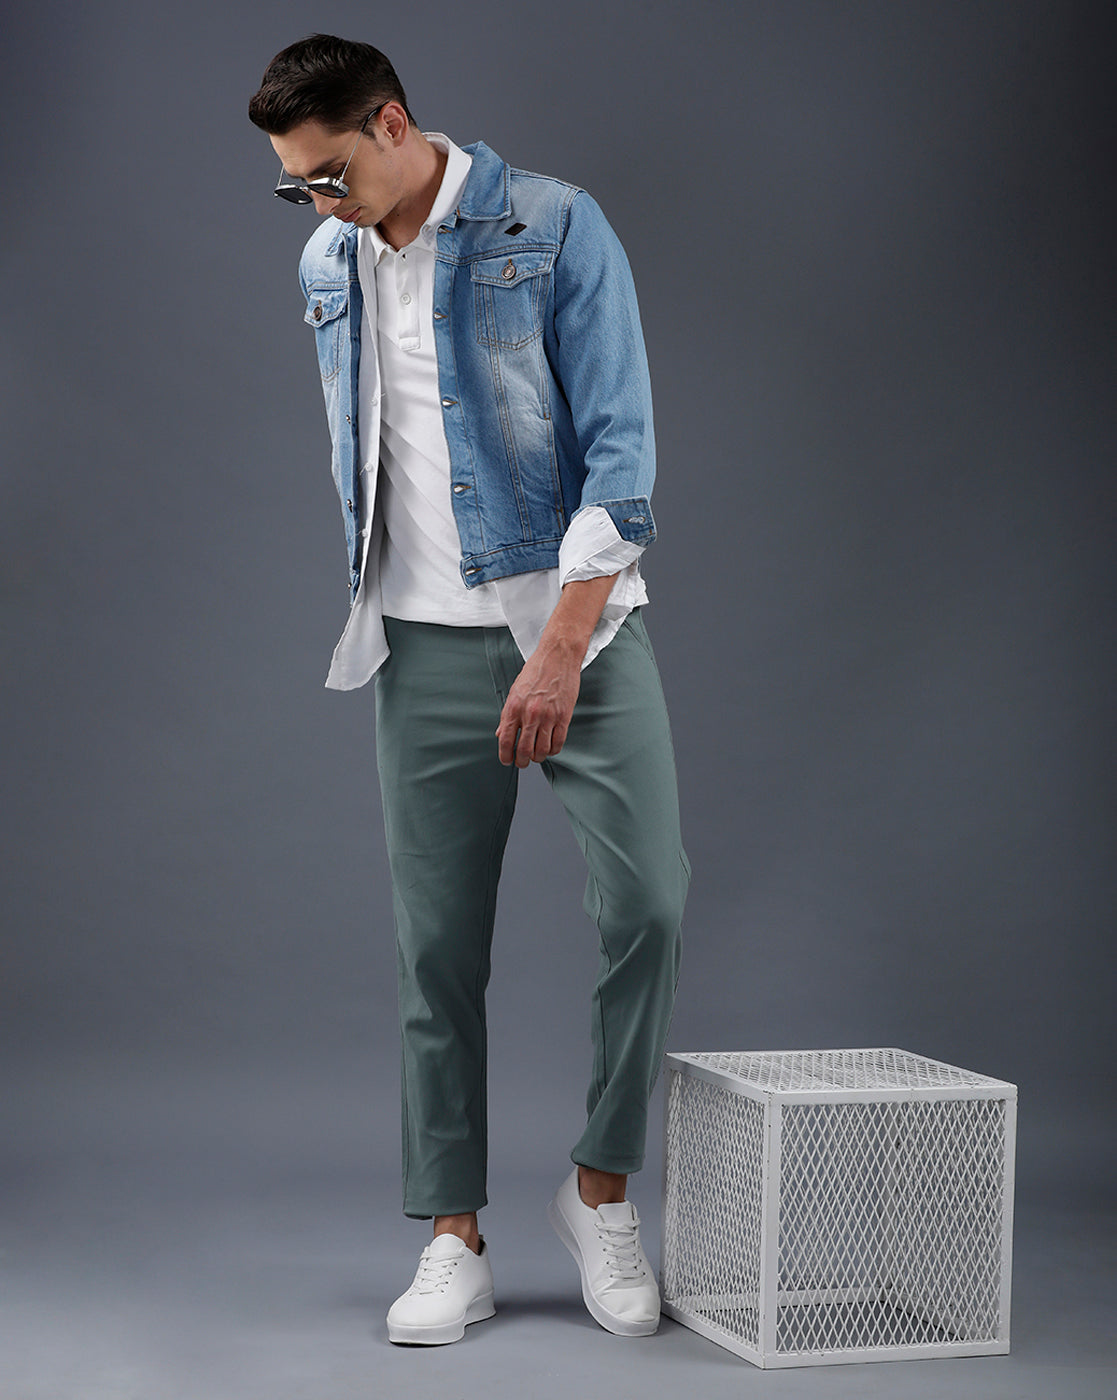 🦺 Levis Jacket Sleeve Length Original Levis Jacket Sleeve fitting Jeans  Jacket ￼ki fitting kaise - YouTube